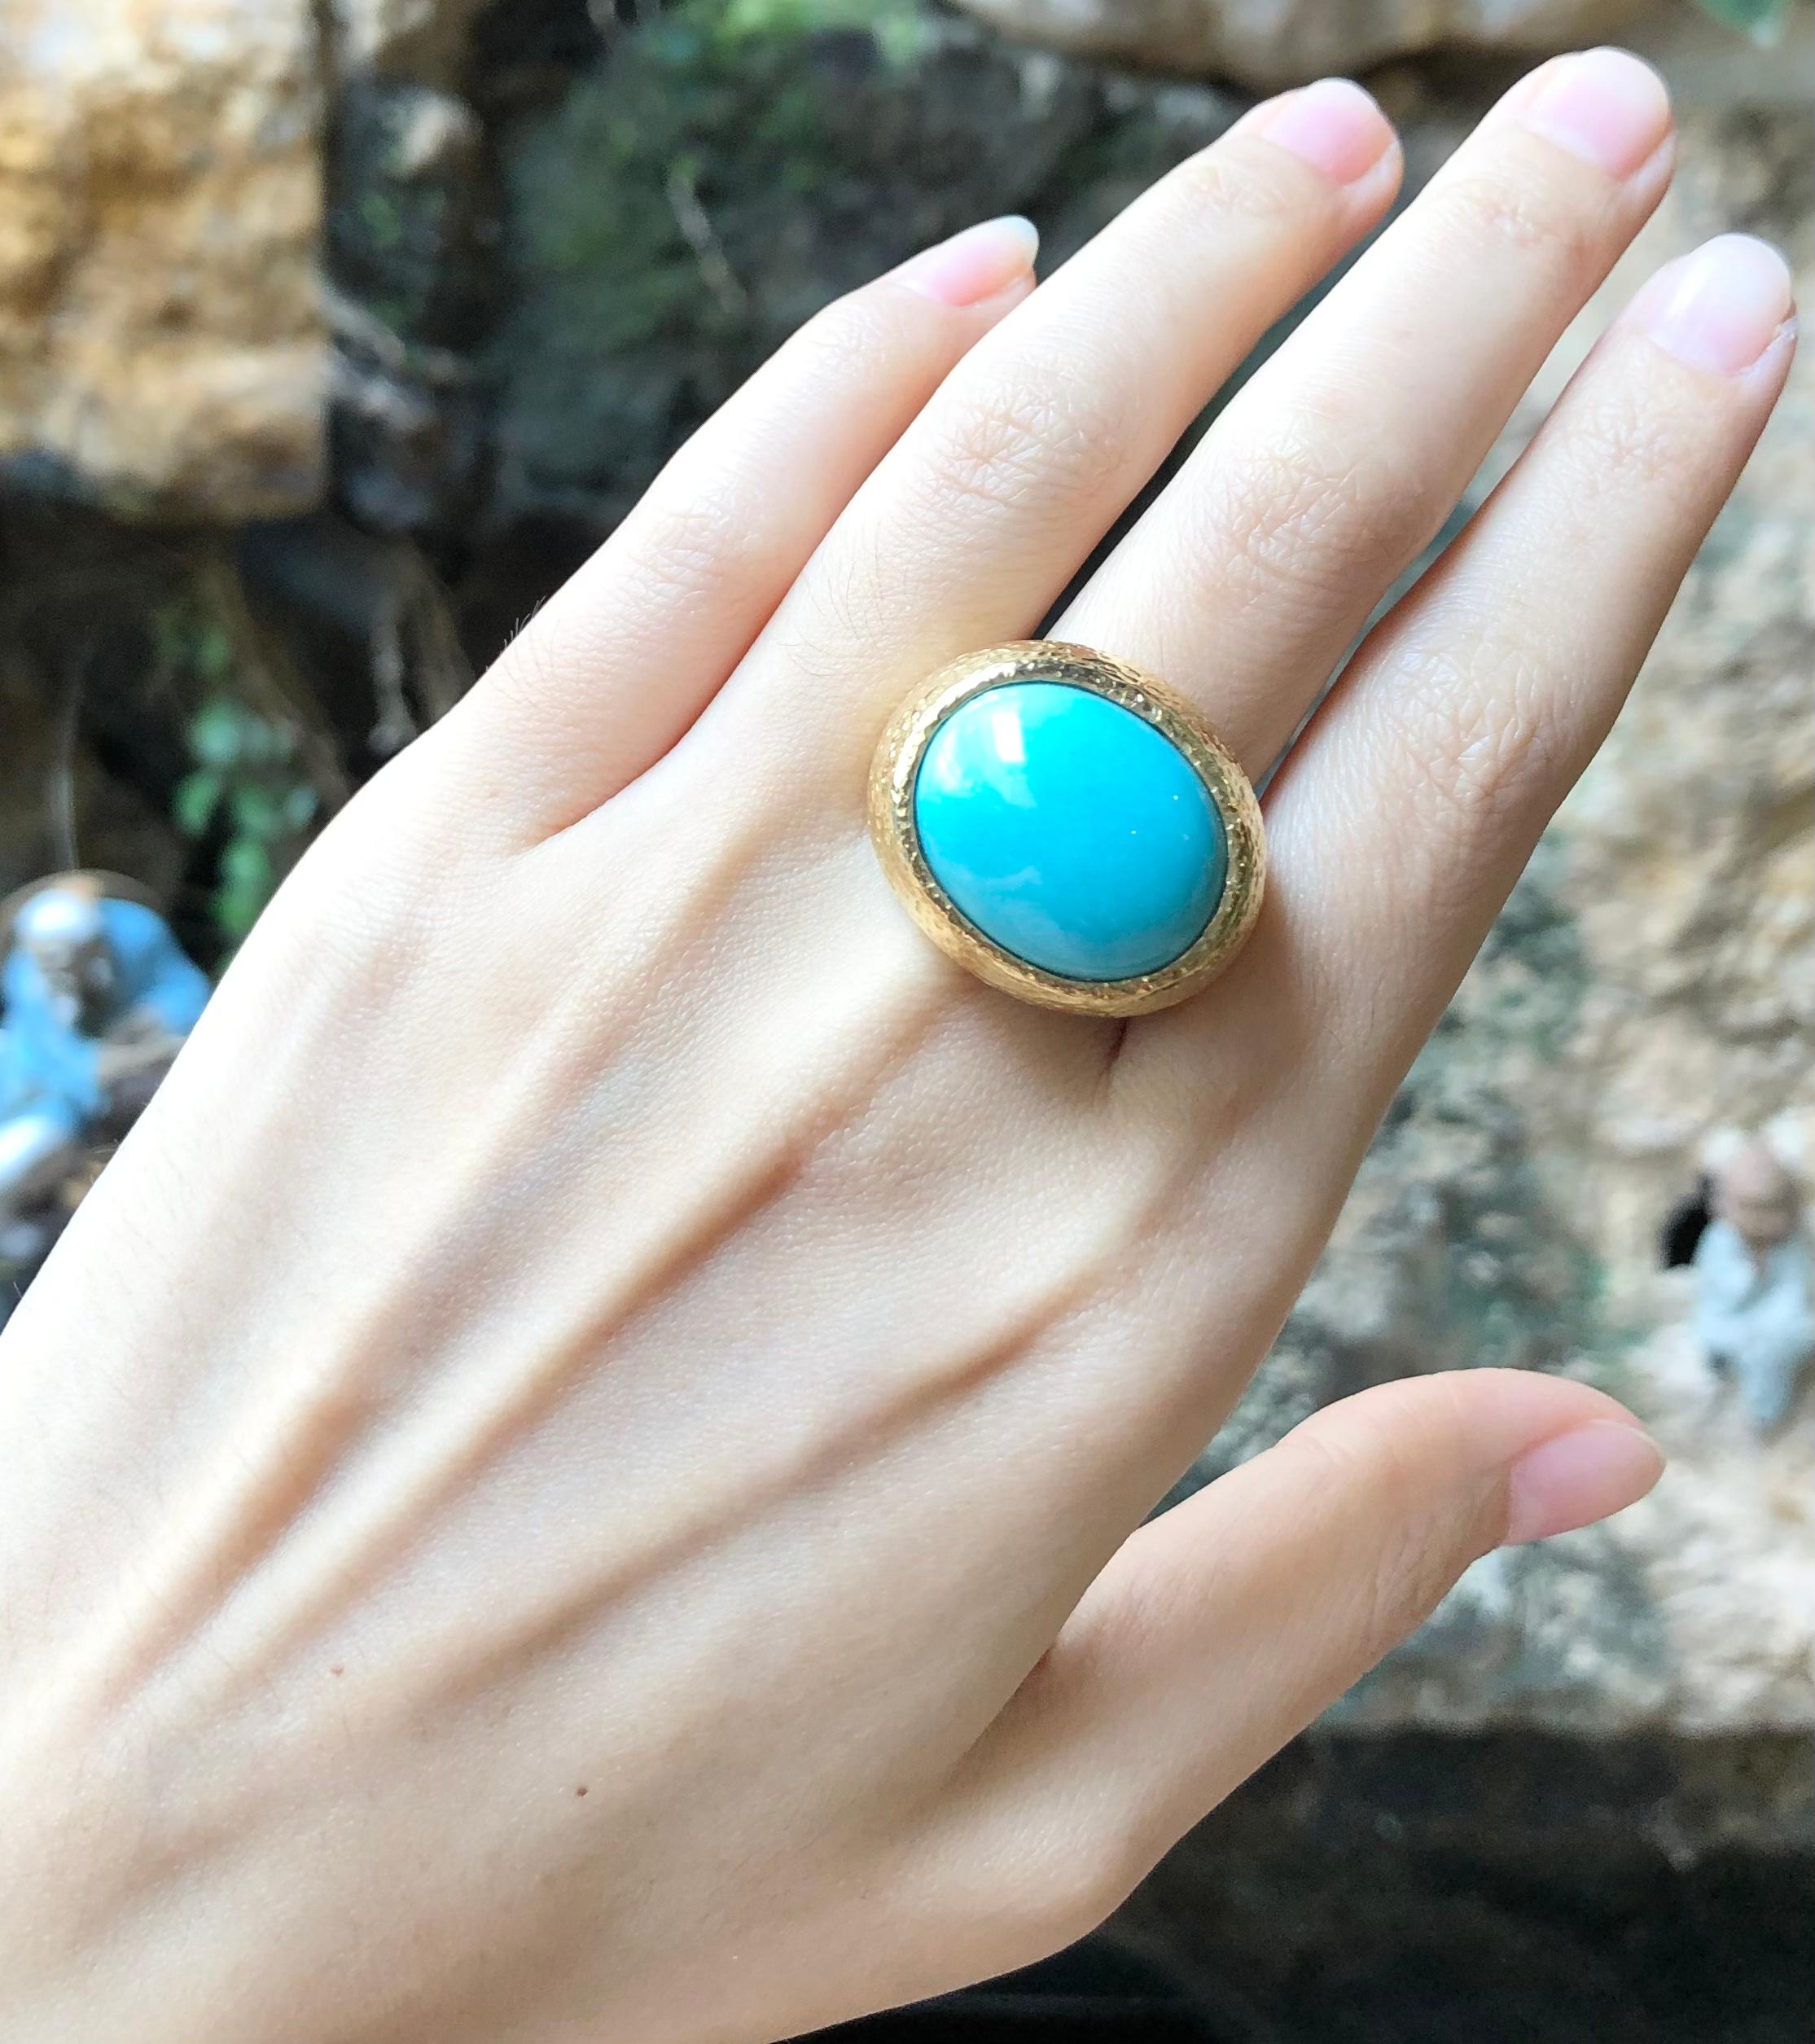 Turquoise Ring set in 18 Karat Gold Settings

Width:  2.3 cm 
Length: 2.1 cm
Ring Size: 56
Total Weight: 33.85grams

